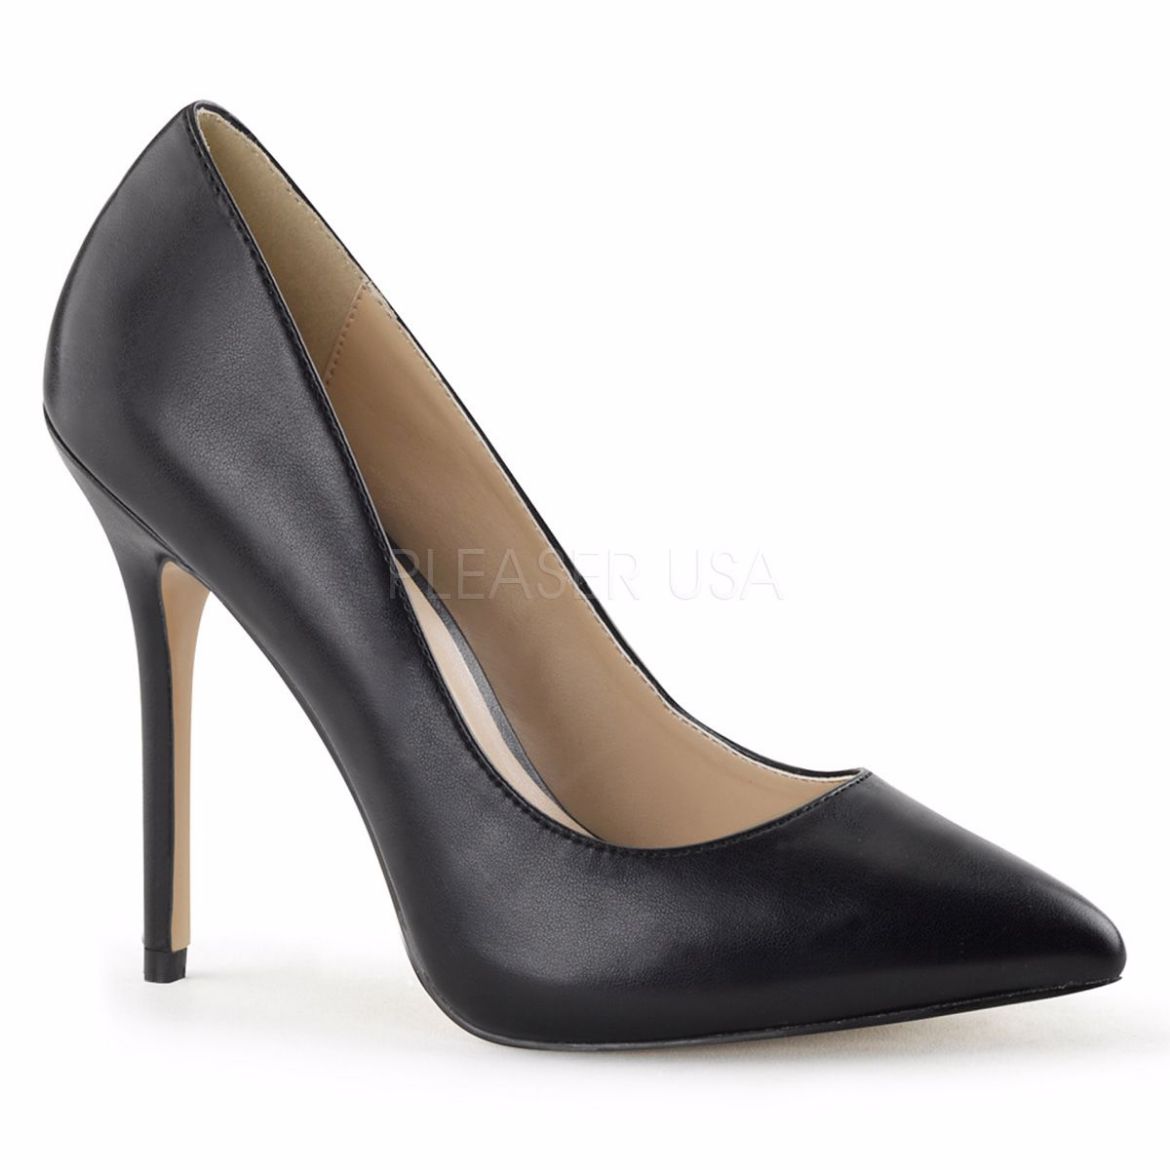 Product image of Pleaser Amuse-20 Black Faux Leather, 5 inch (12.7 cm) Heel, 3/8 inch (1 cm) Hidden Platform Court Pump Shoes